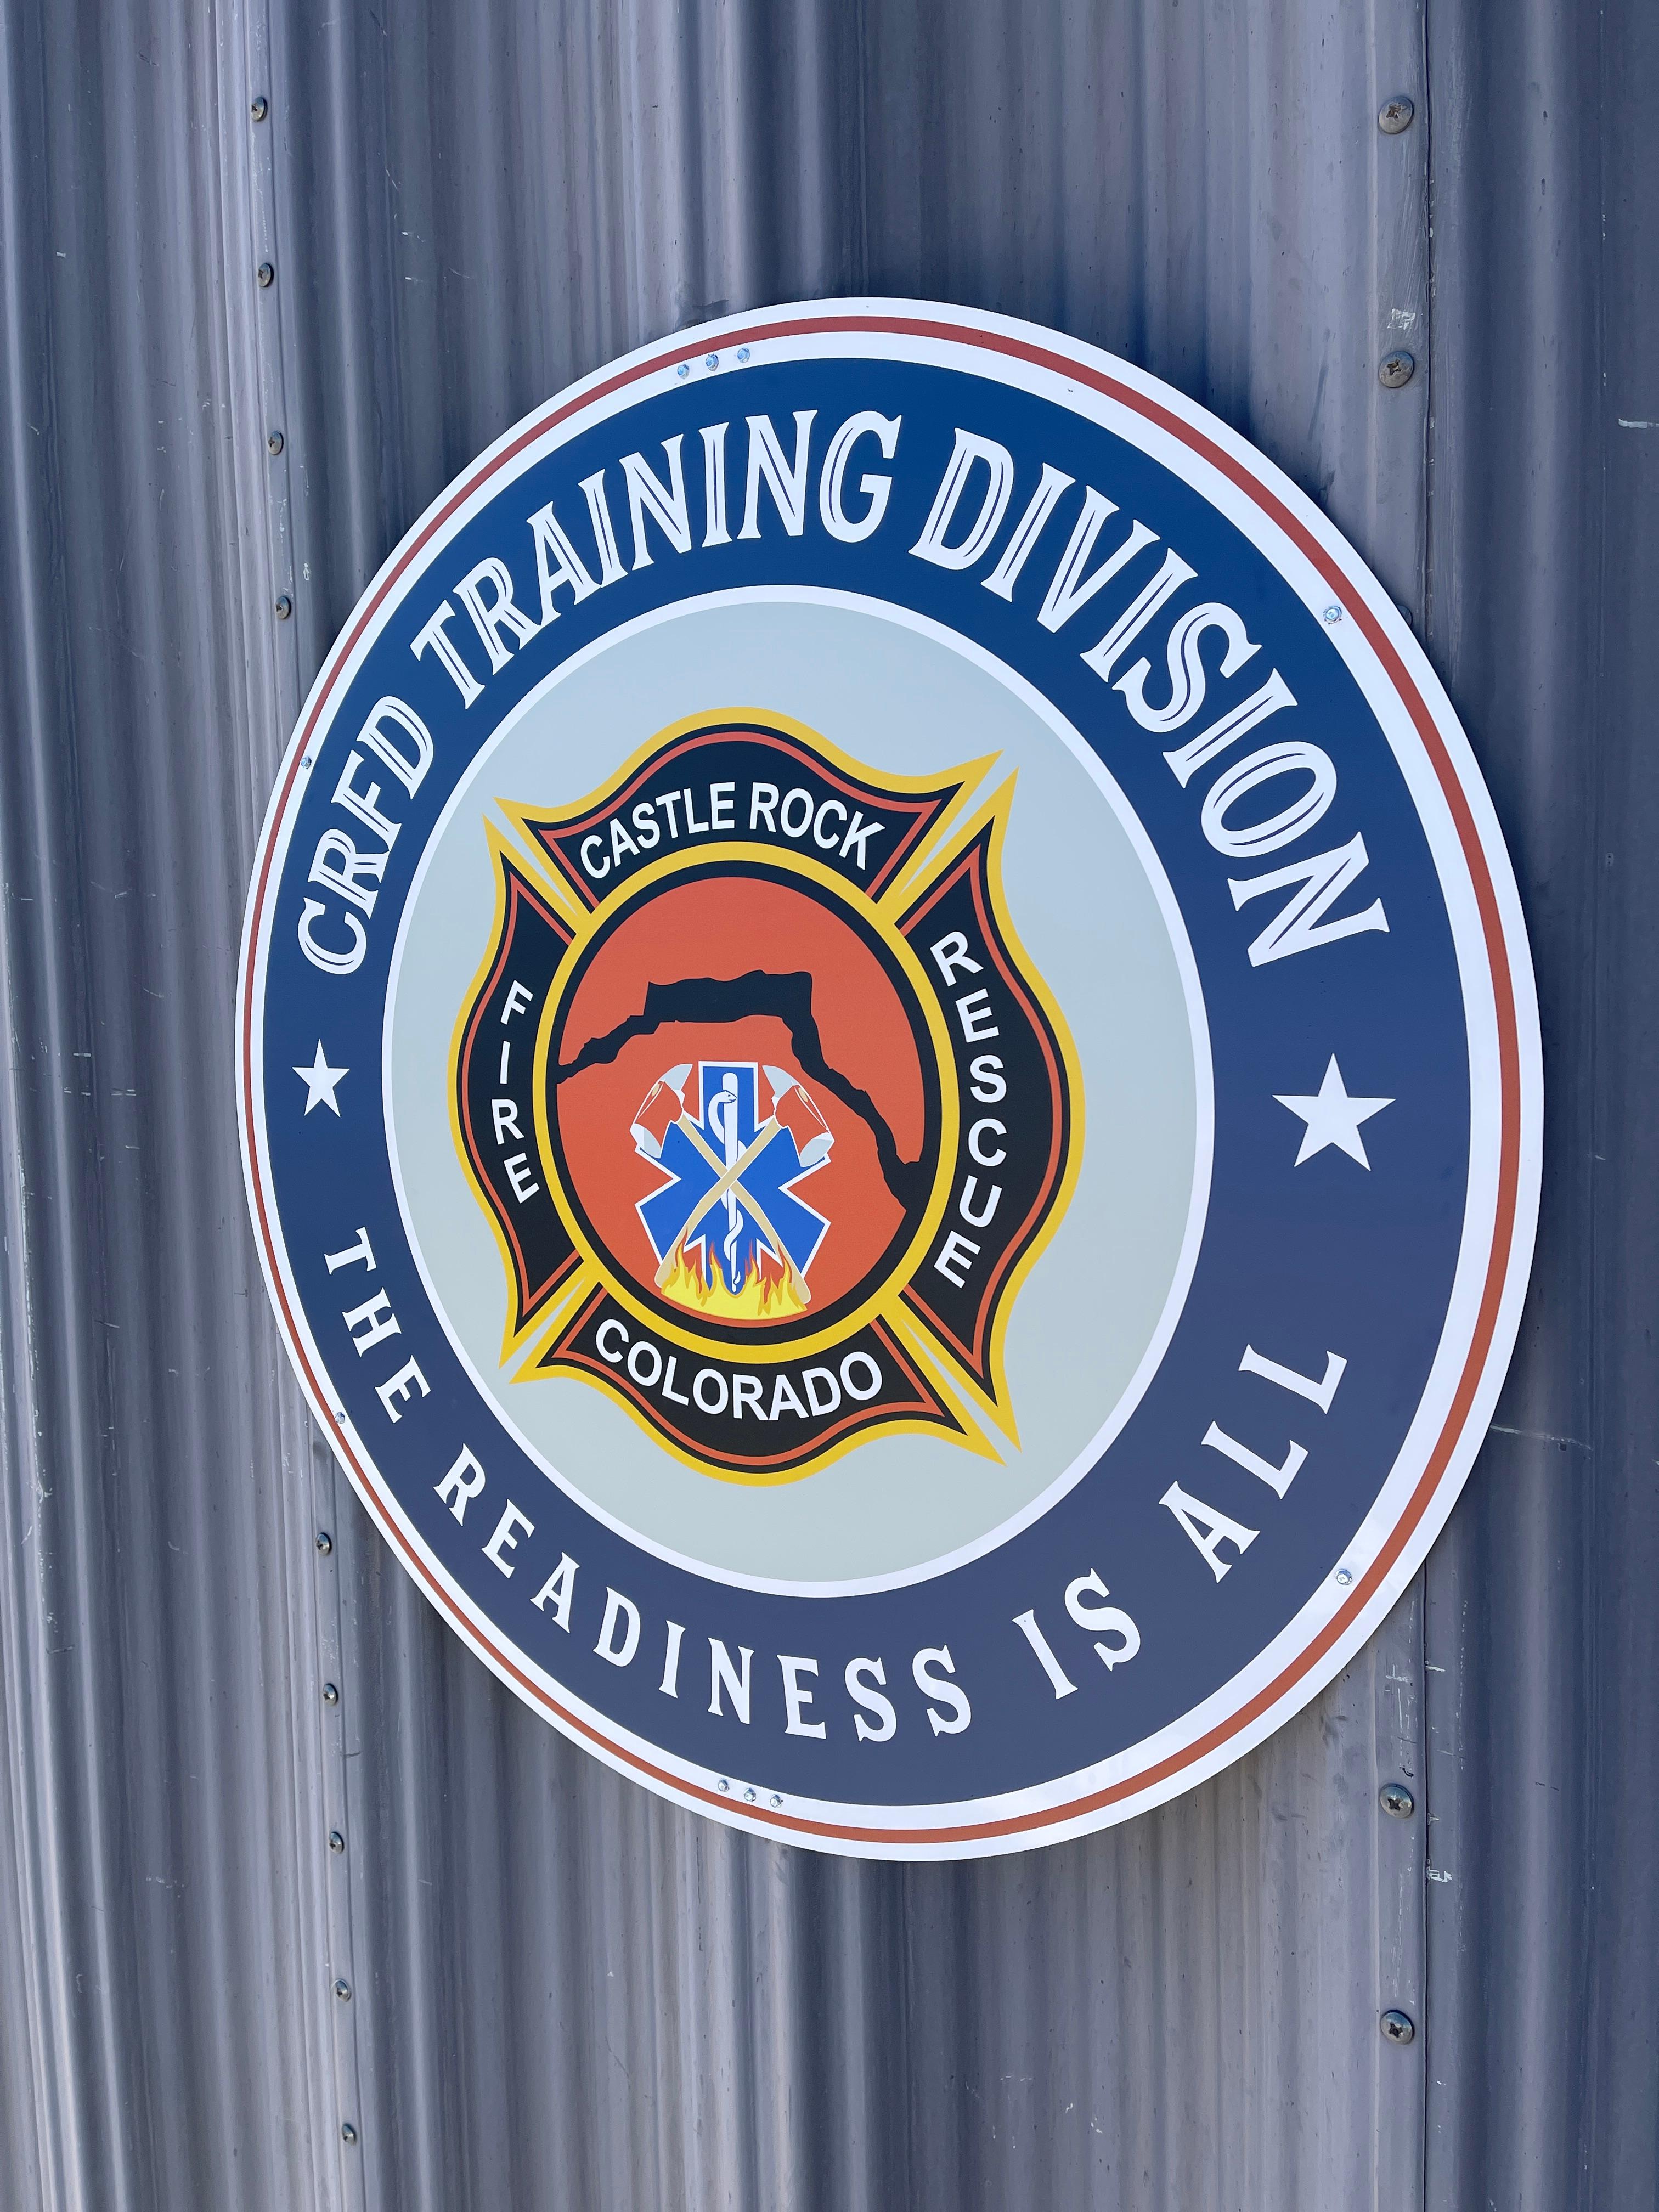 CRFD fire tower logo